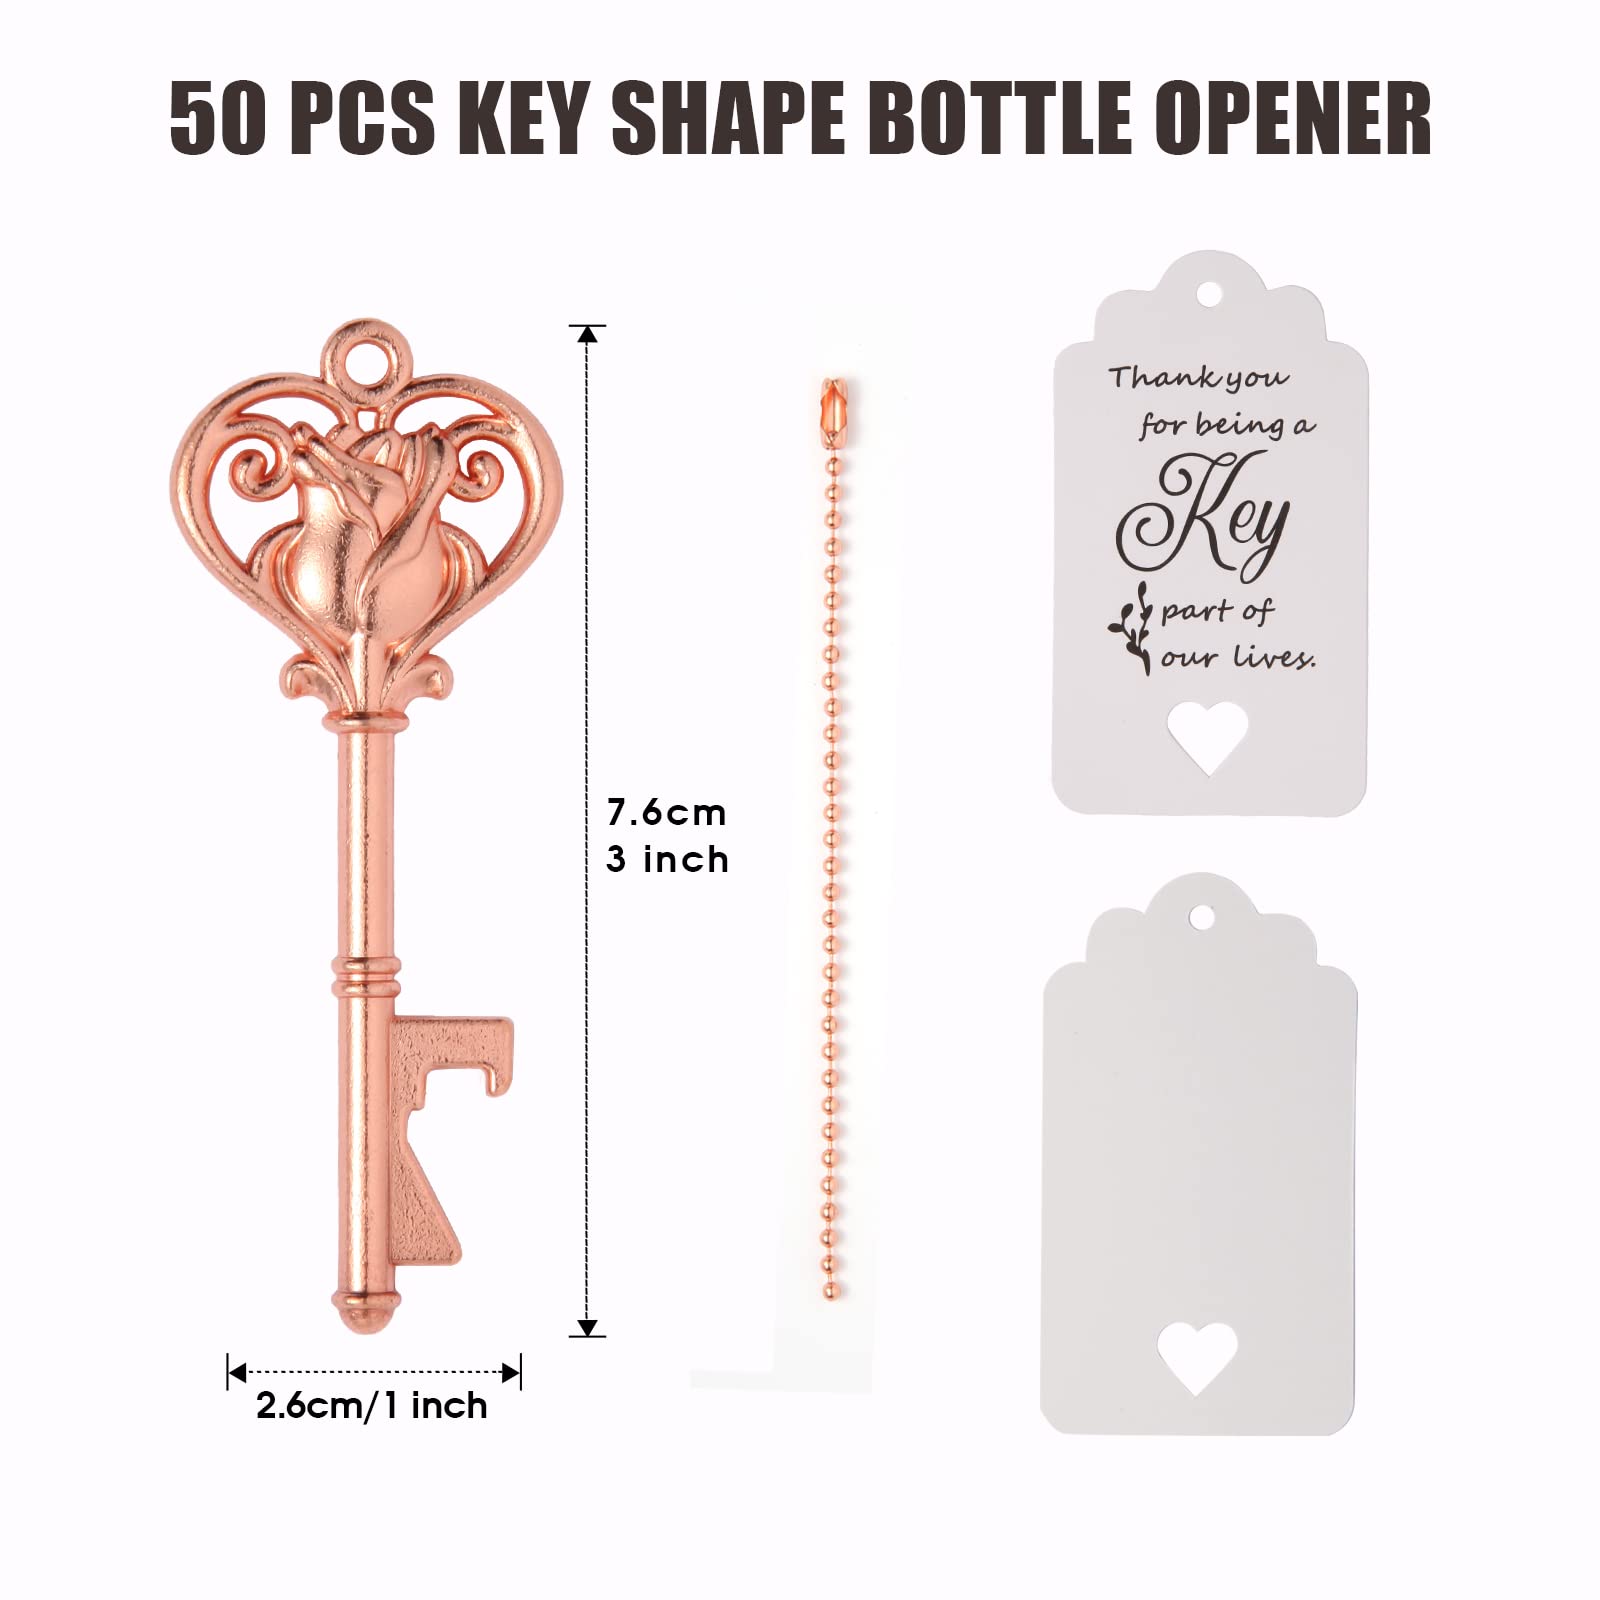 XHIPY 50 PCS Skeleton Key Bottle Openers,Wedding Favors guests Bulk,Roses Key Bottle Opener,Bridal Shower Party Favors with Card Tag(Rose Gold)